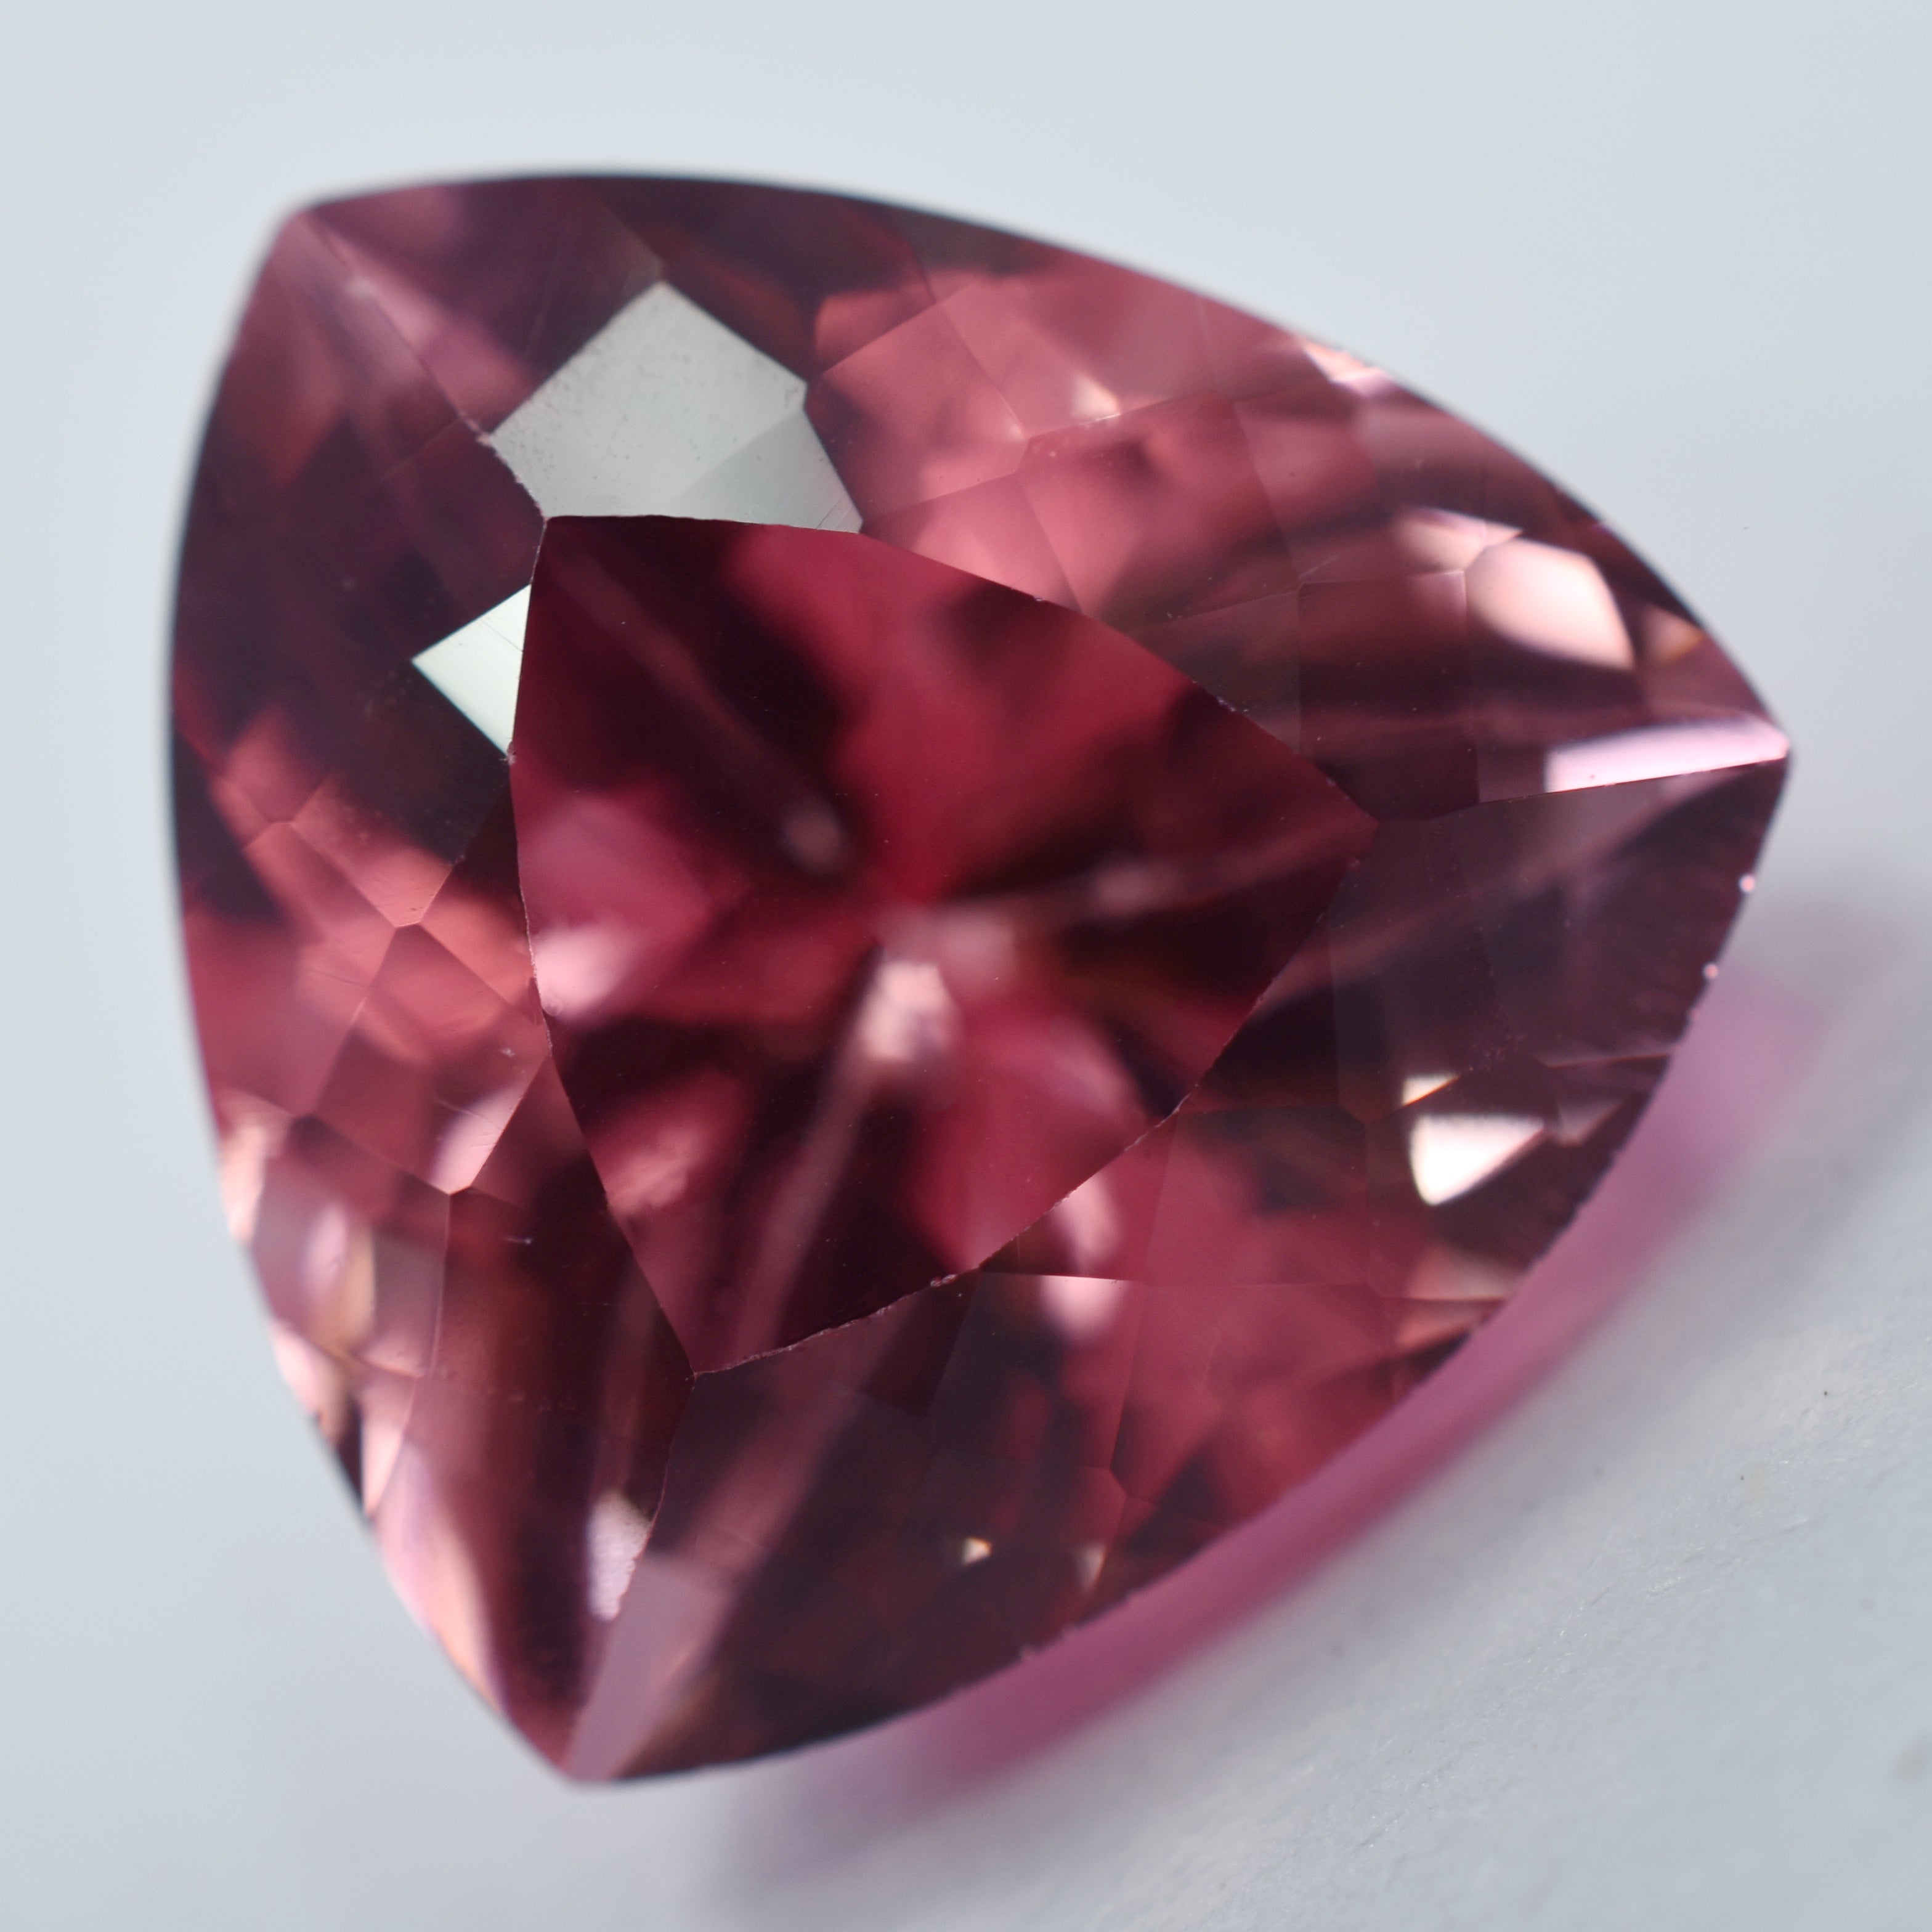 Trillion Cut Sapphire Gem Natural CERTIFIED Loose Gemstone 7.55 Carat | Best For Wisdom & Protection | BEST OFFER